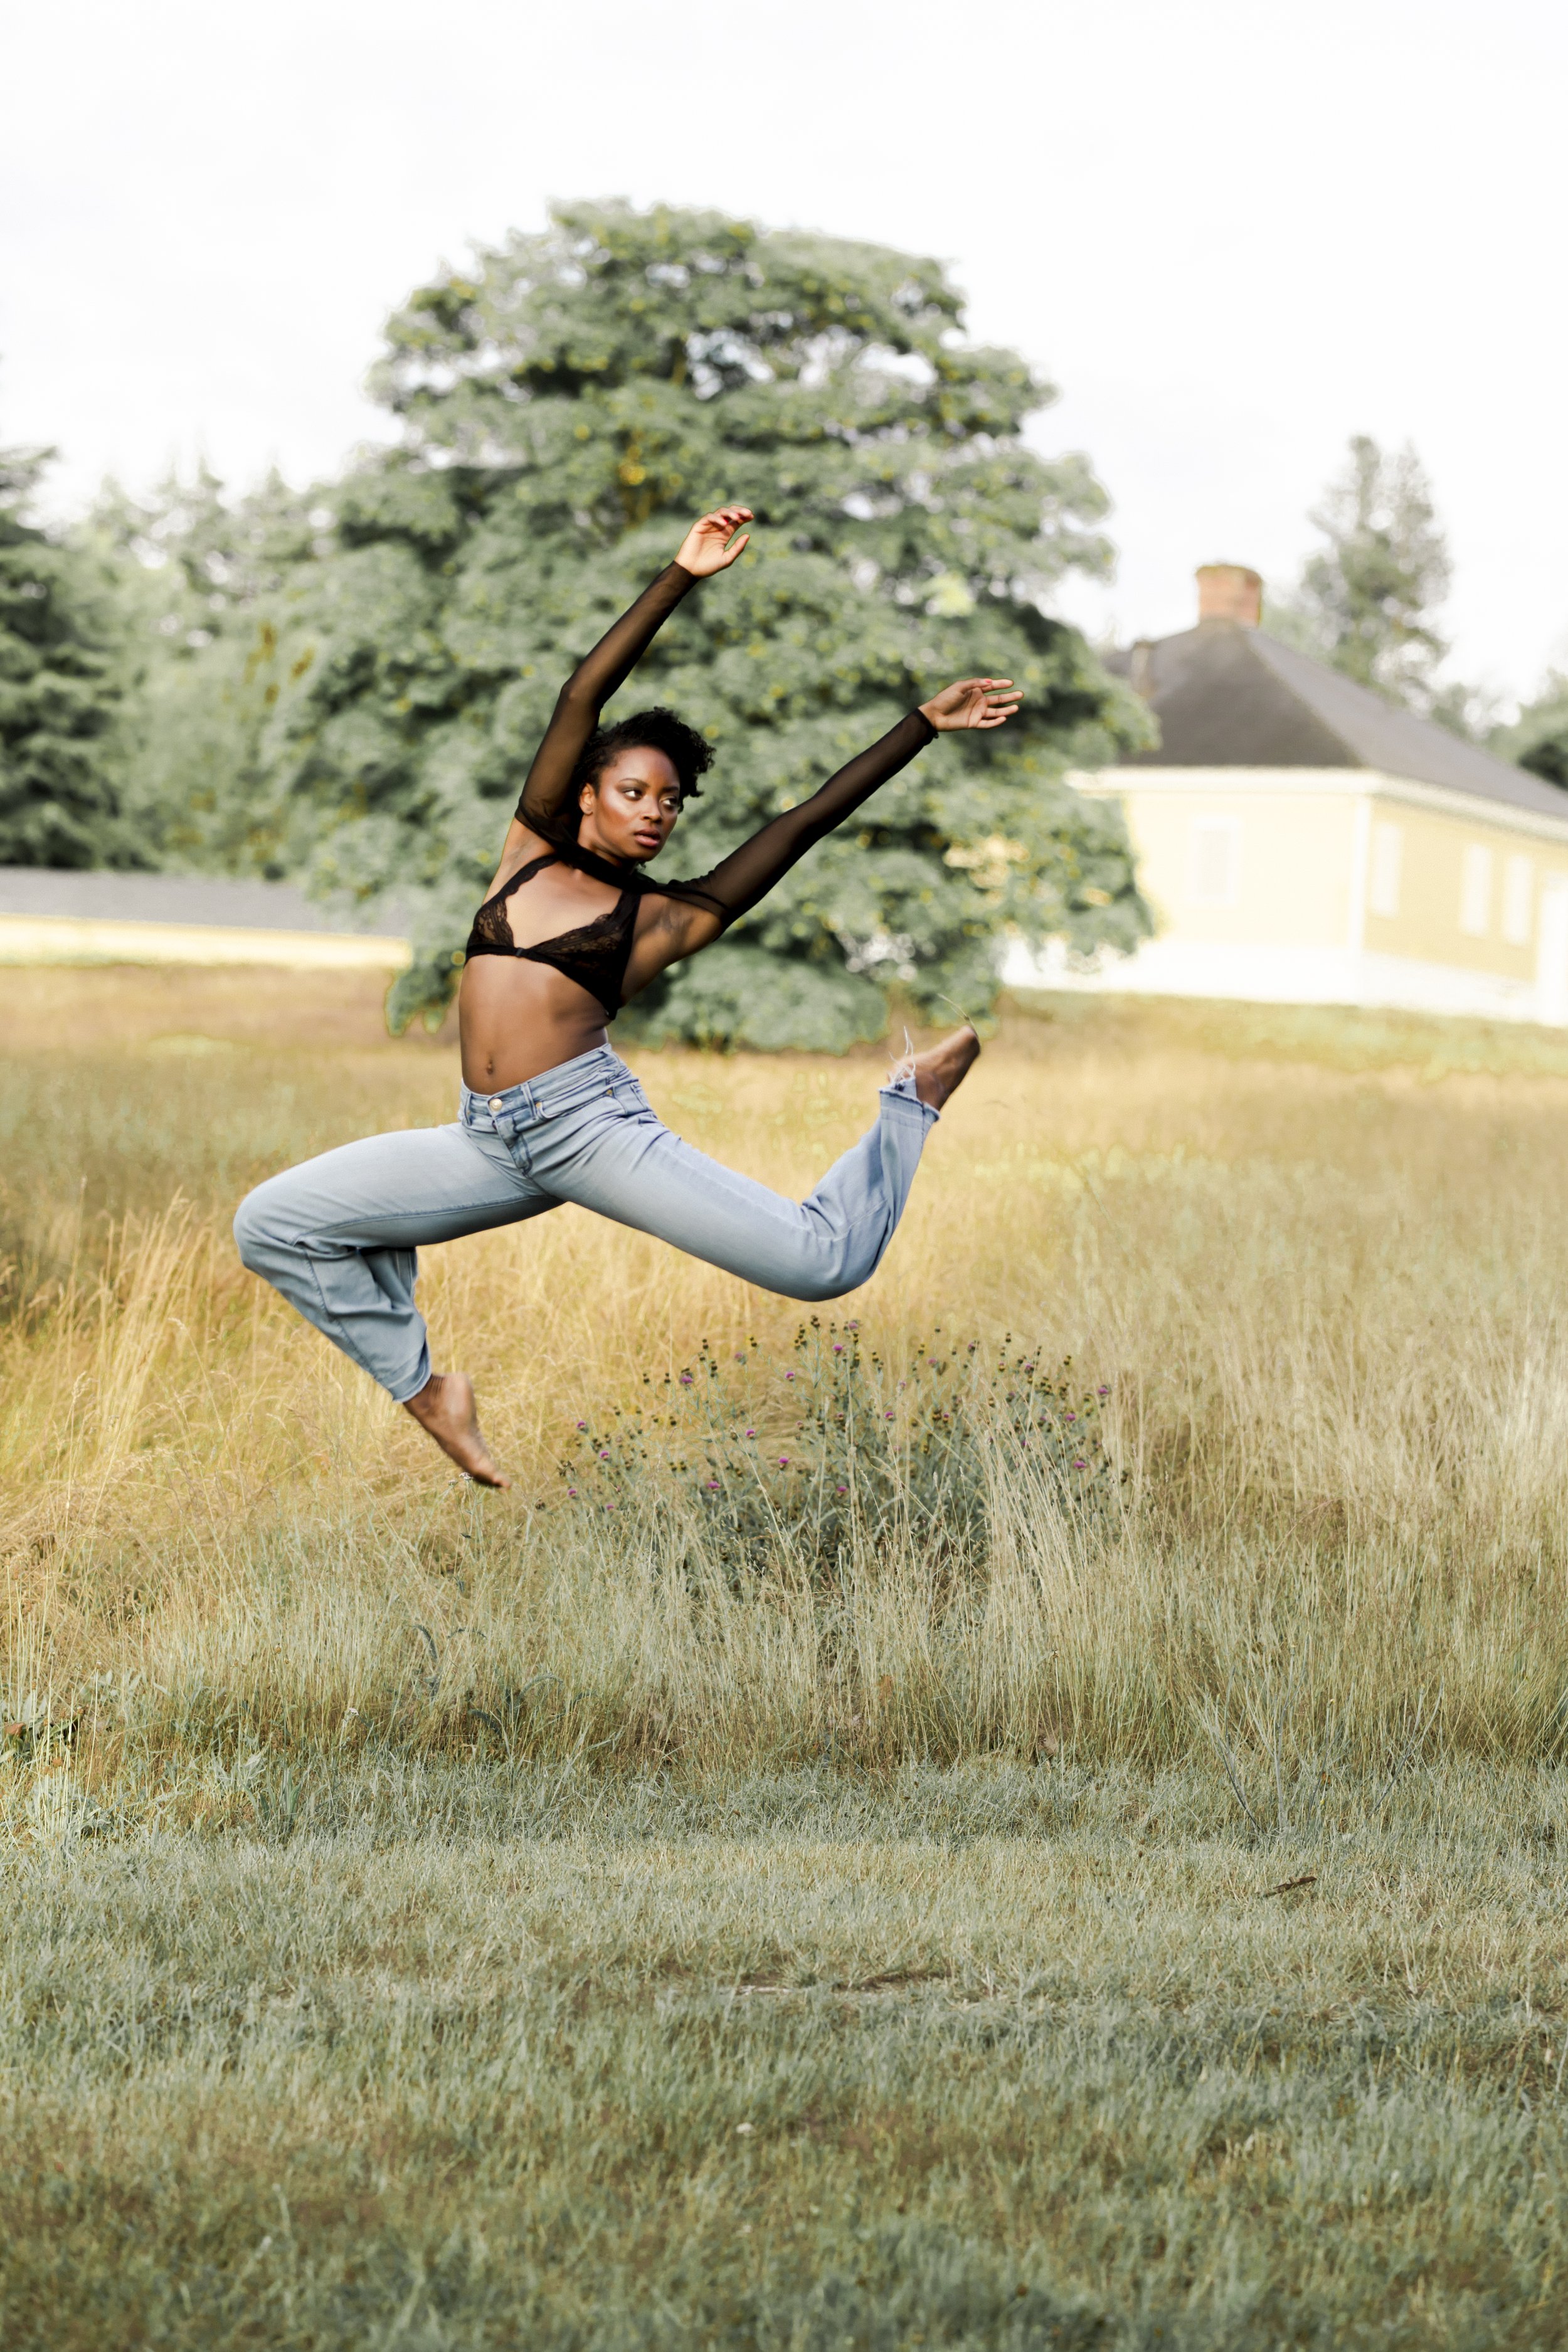  national rhythmic gymnastics team member in Discovery Park Photoshoot.  Dance portrait. 